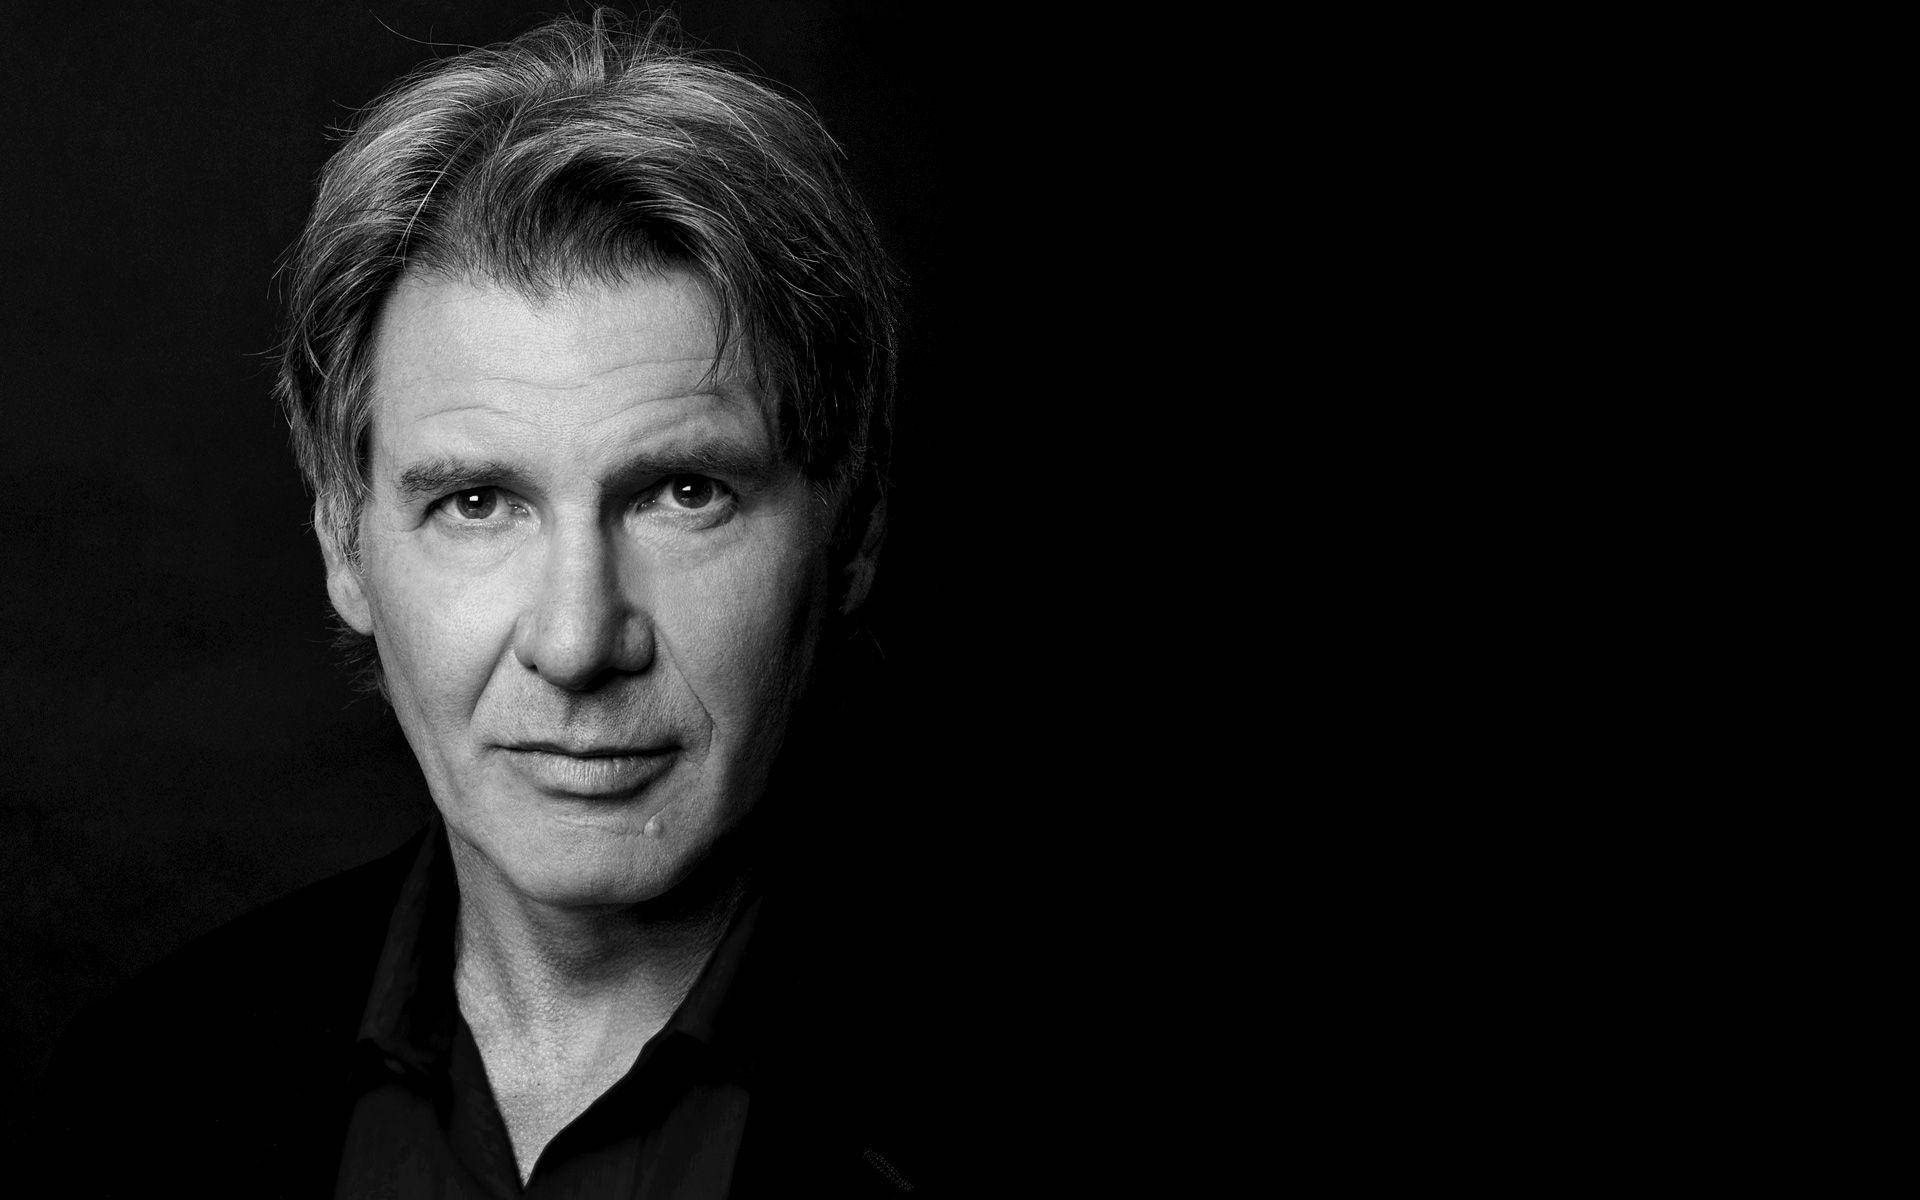 Harrison Ford Portrait Photoshoot Picture